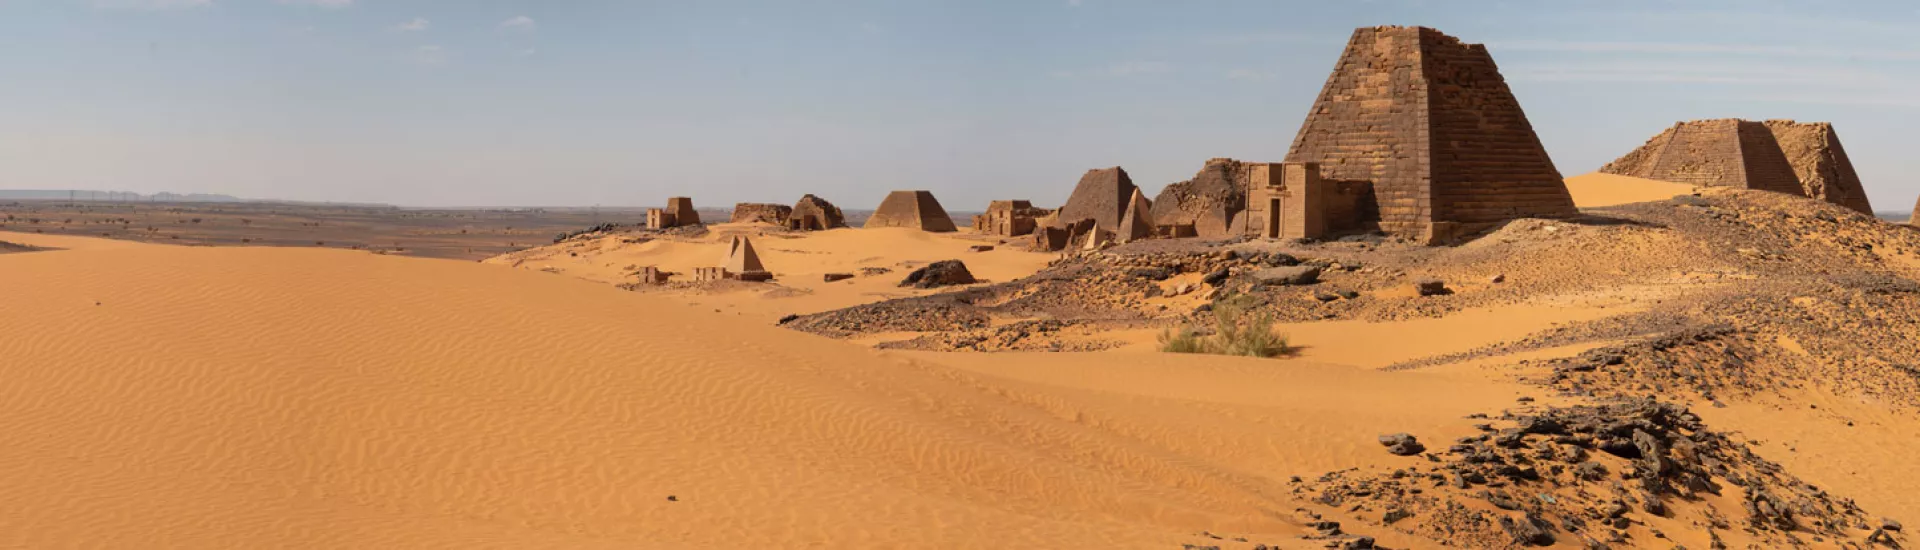 The pyramids of Meroe in Sudan